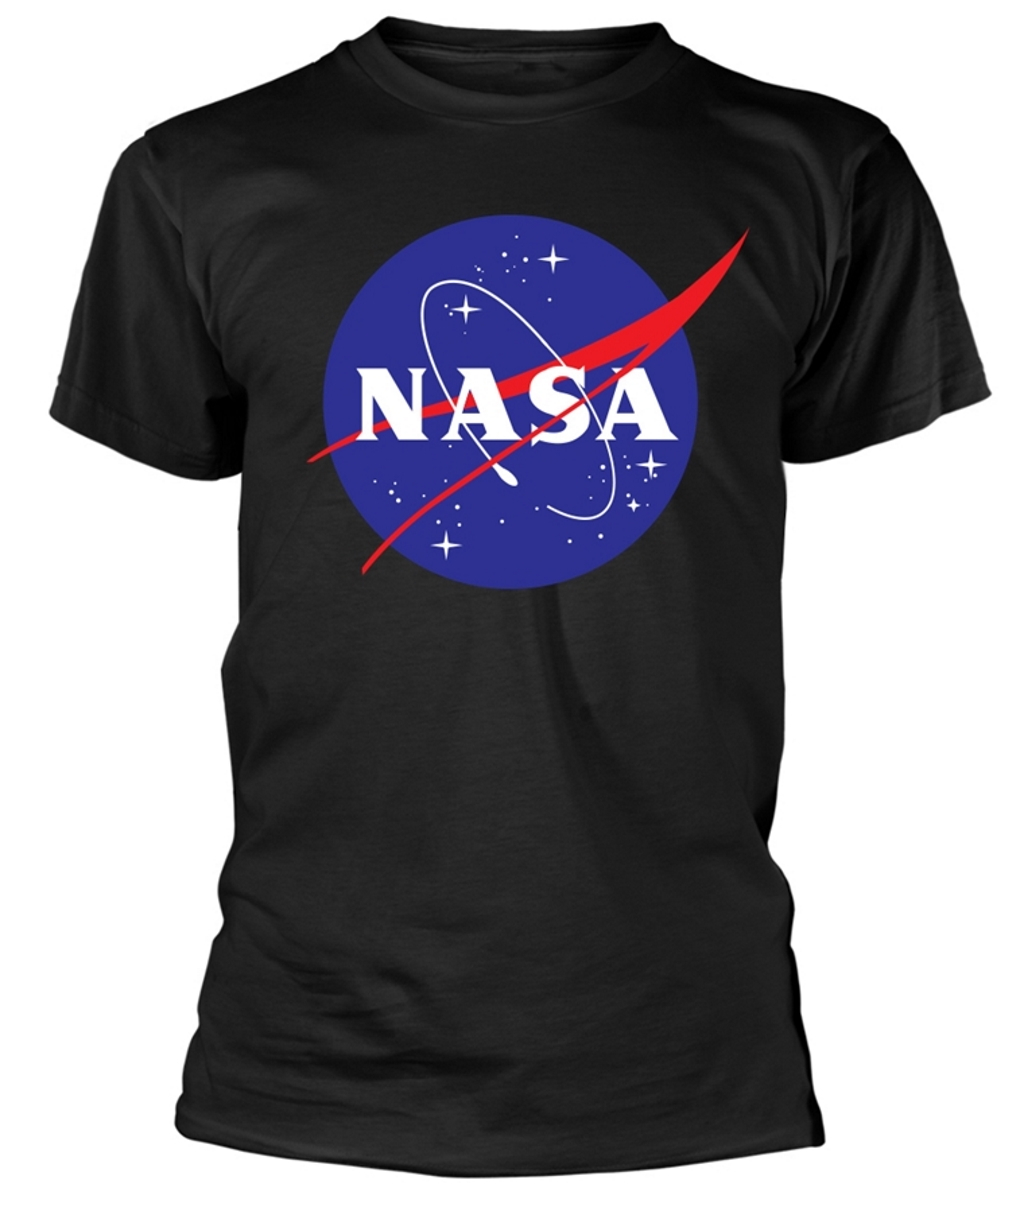 NASA 'Insignia Logo' (Black) T-Shirt - NEW & OFFICIAL! | eBay